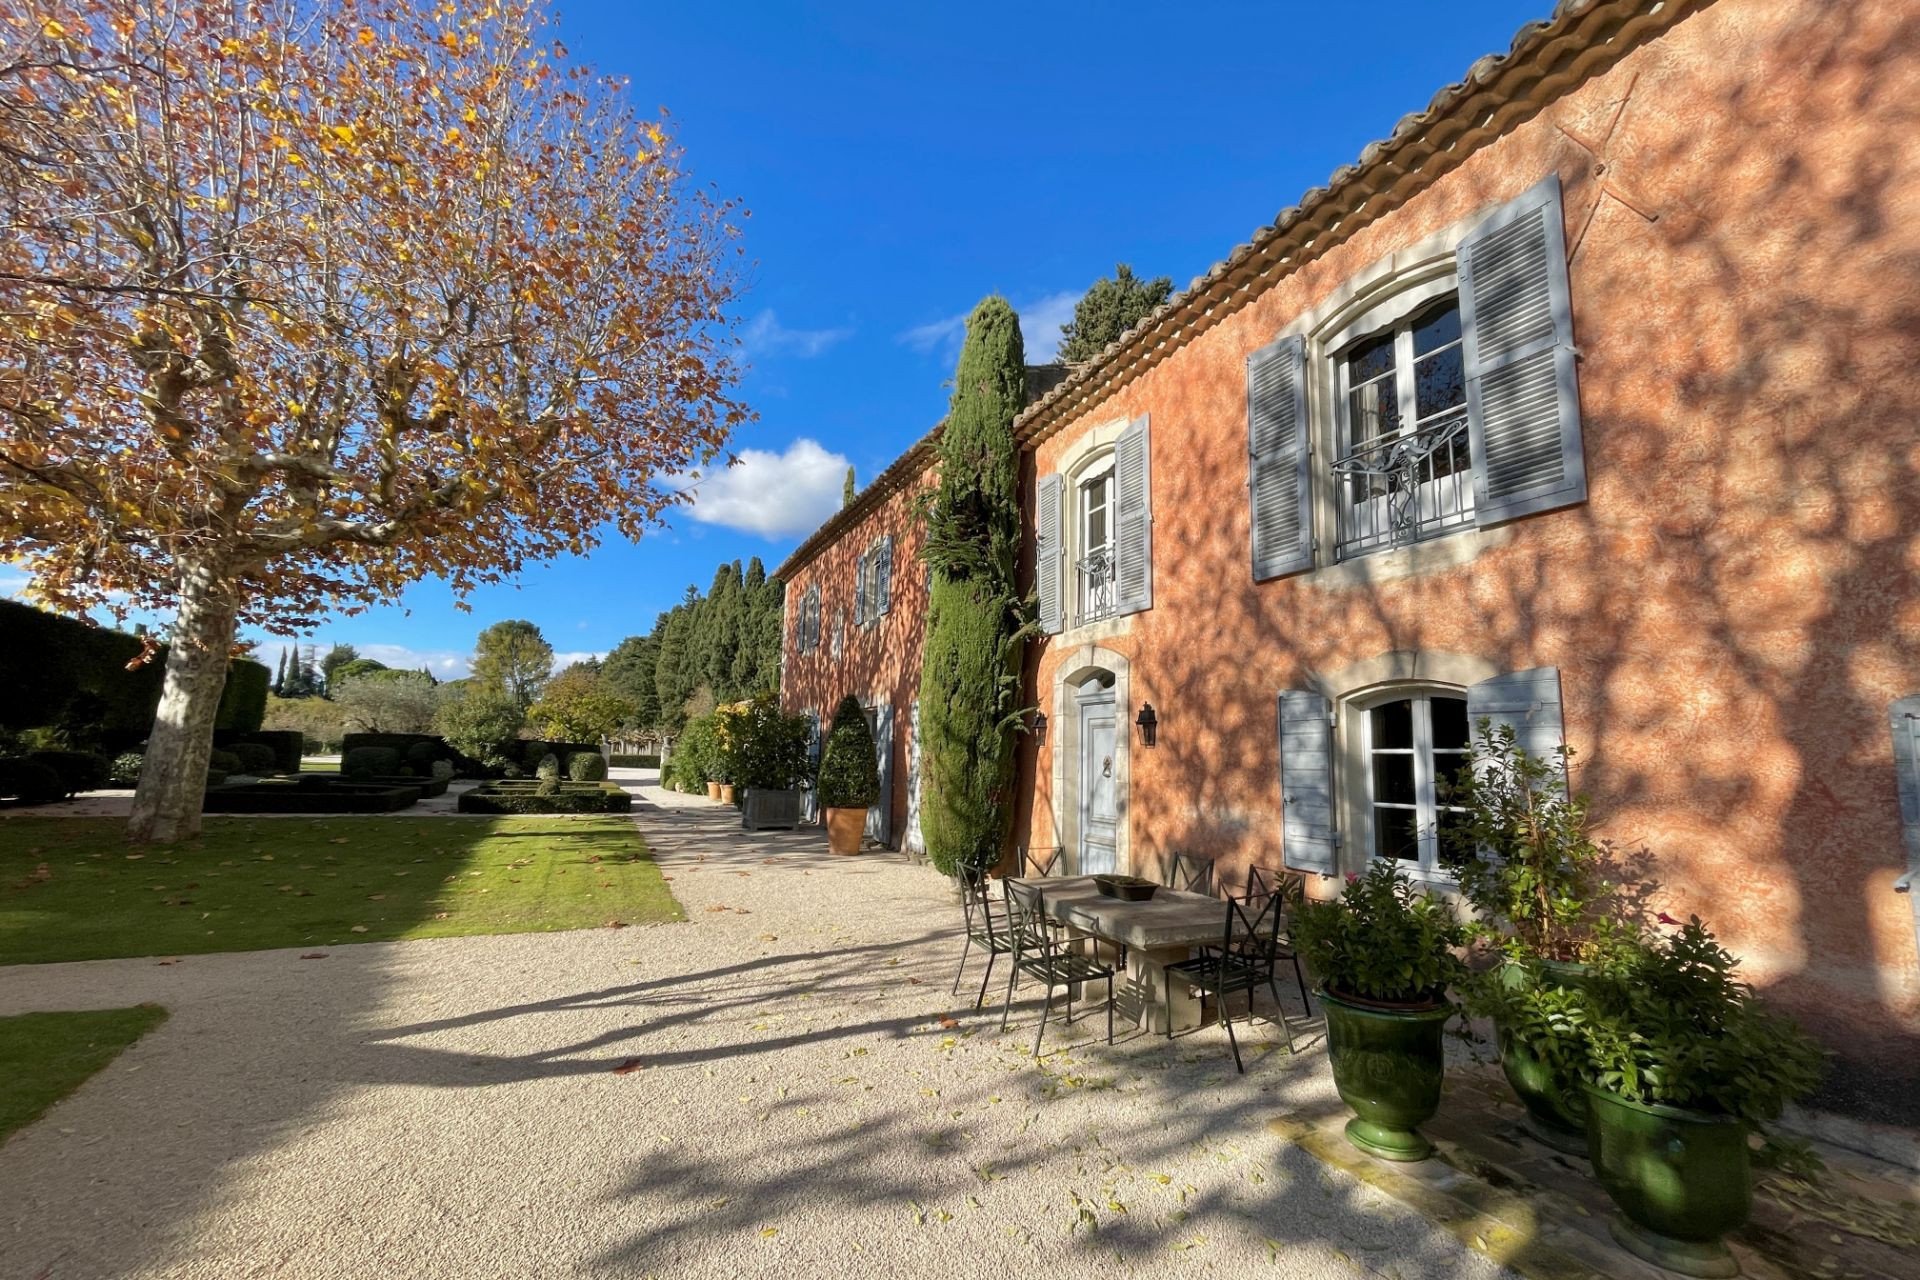 Francis+York+Beautifully Restored Provençal Farmhouse Near Saint-Rémy-de-Provence  00012.jpeg